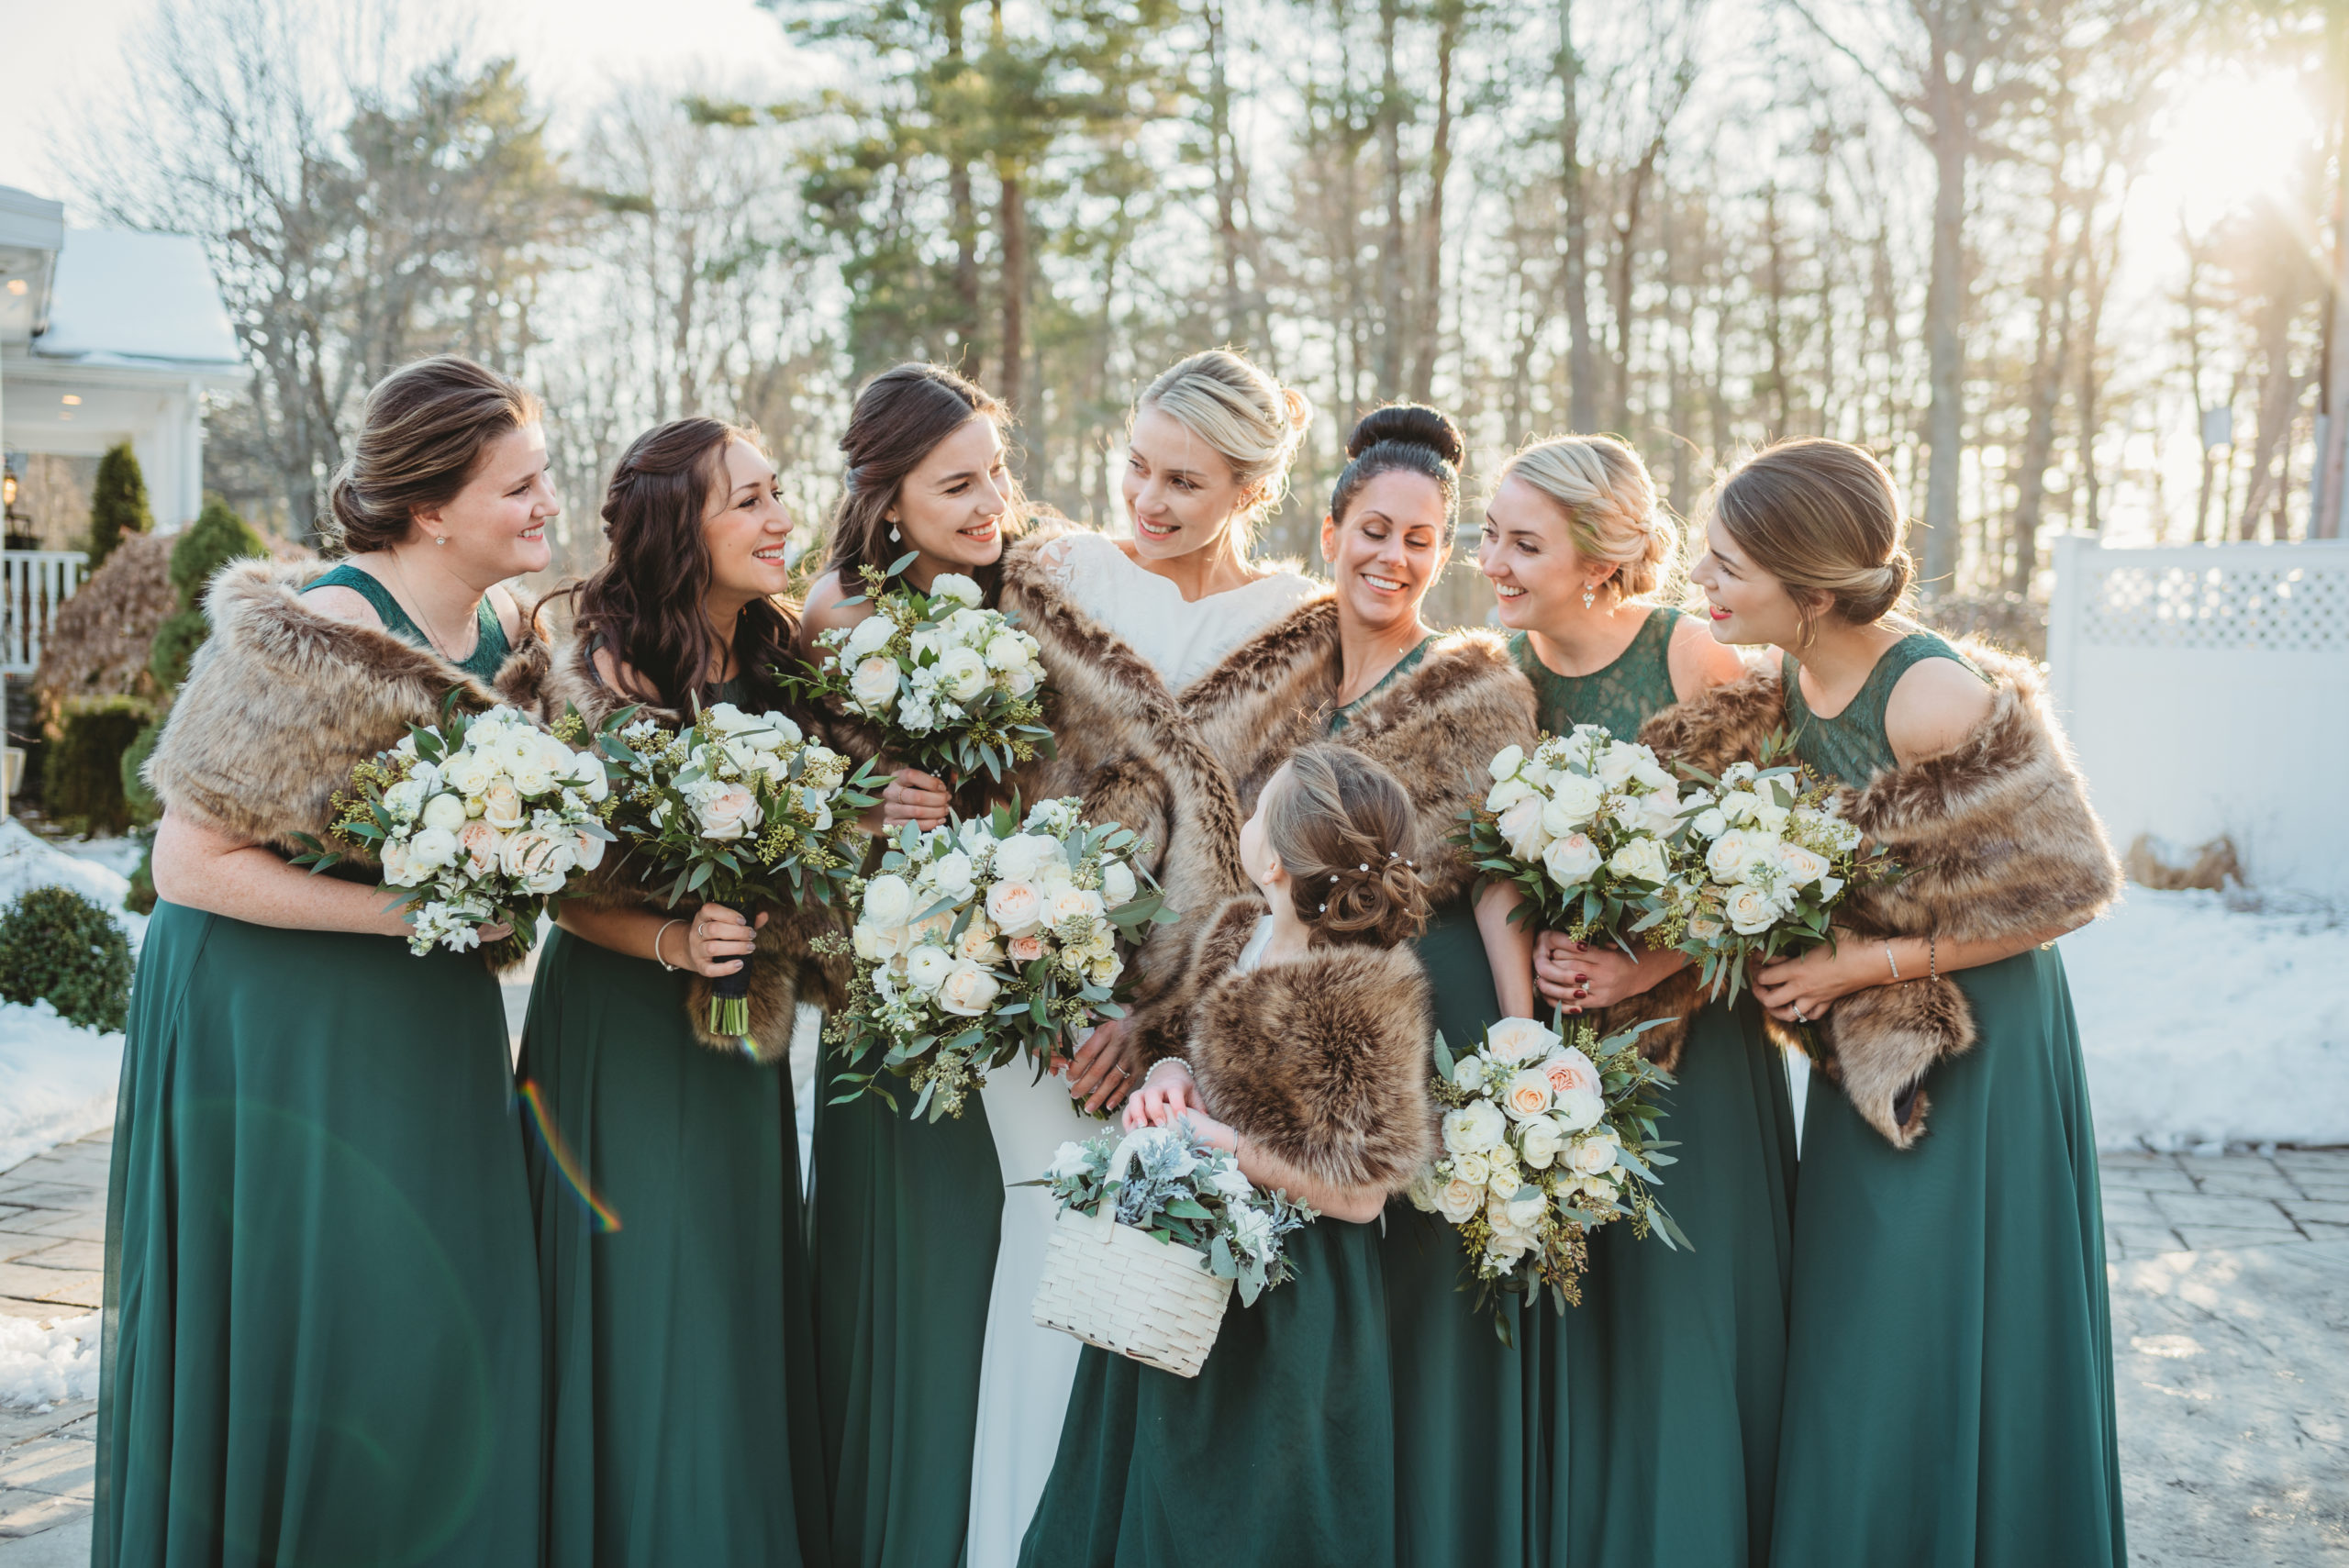 Bride and bridesmaids at a winter wedding - a beautiful season for a wedding